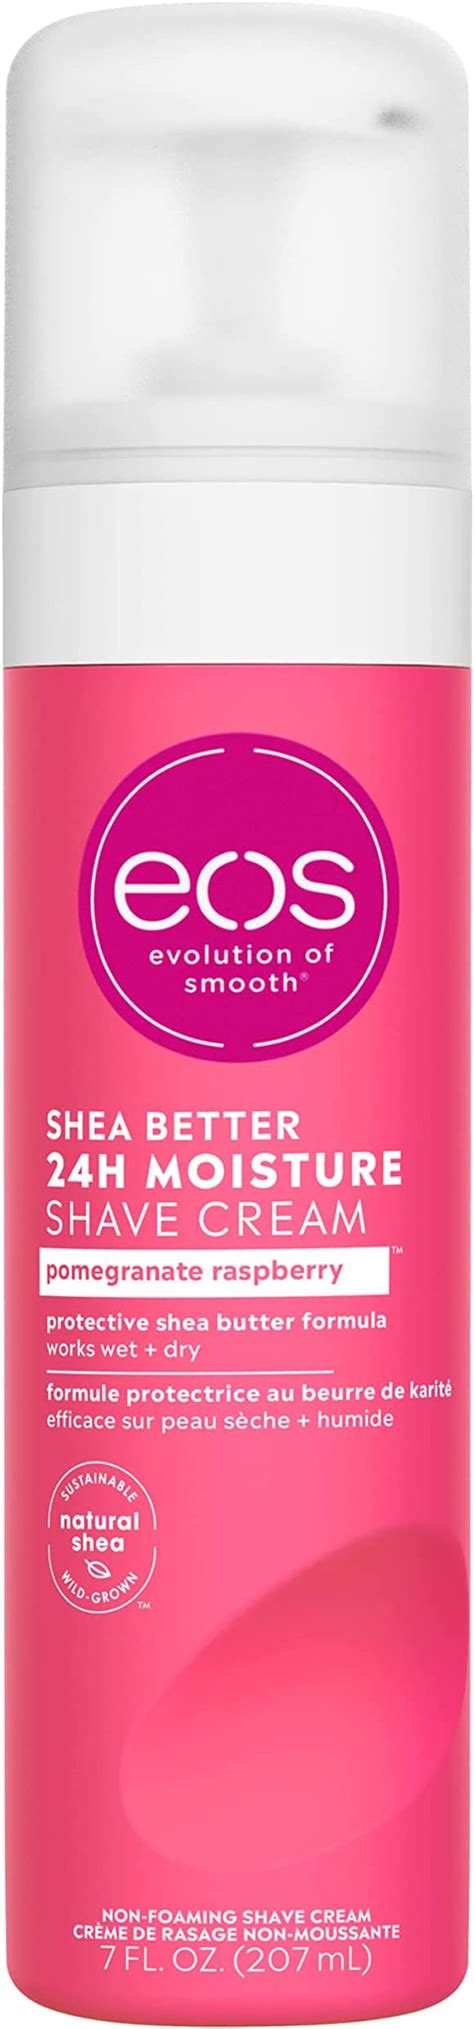 Eos Shea Better Shaving Cream For Women Pomegranate Raspberry Shave Cream Skin Care And